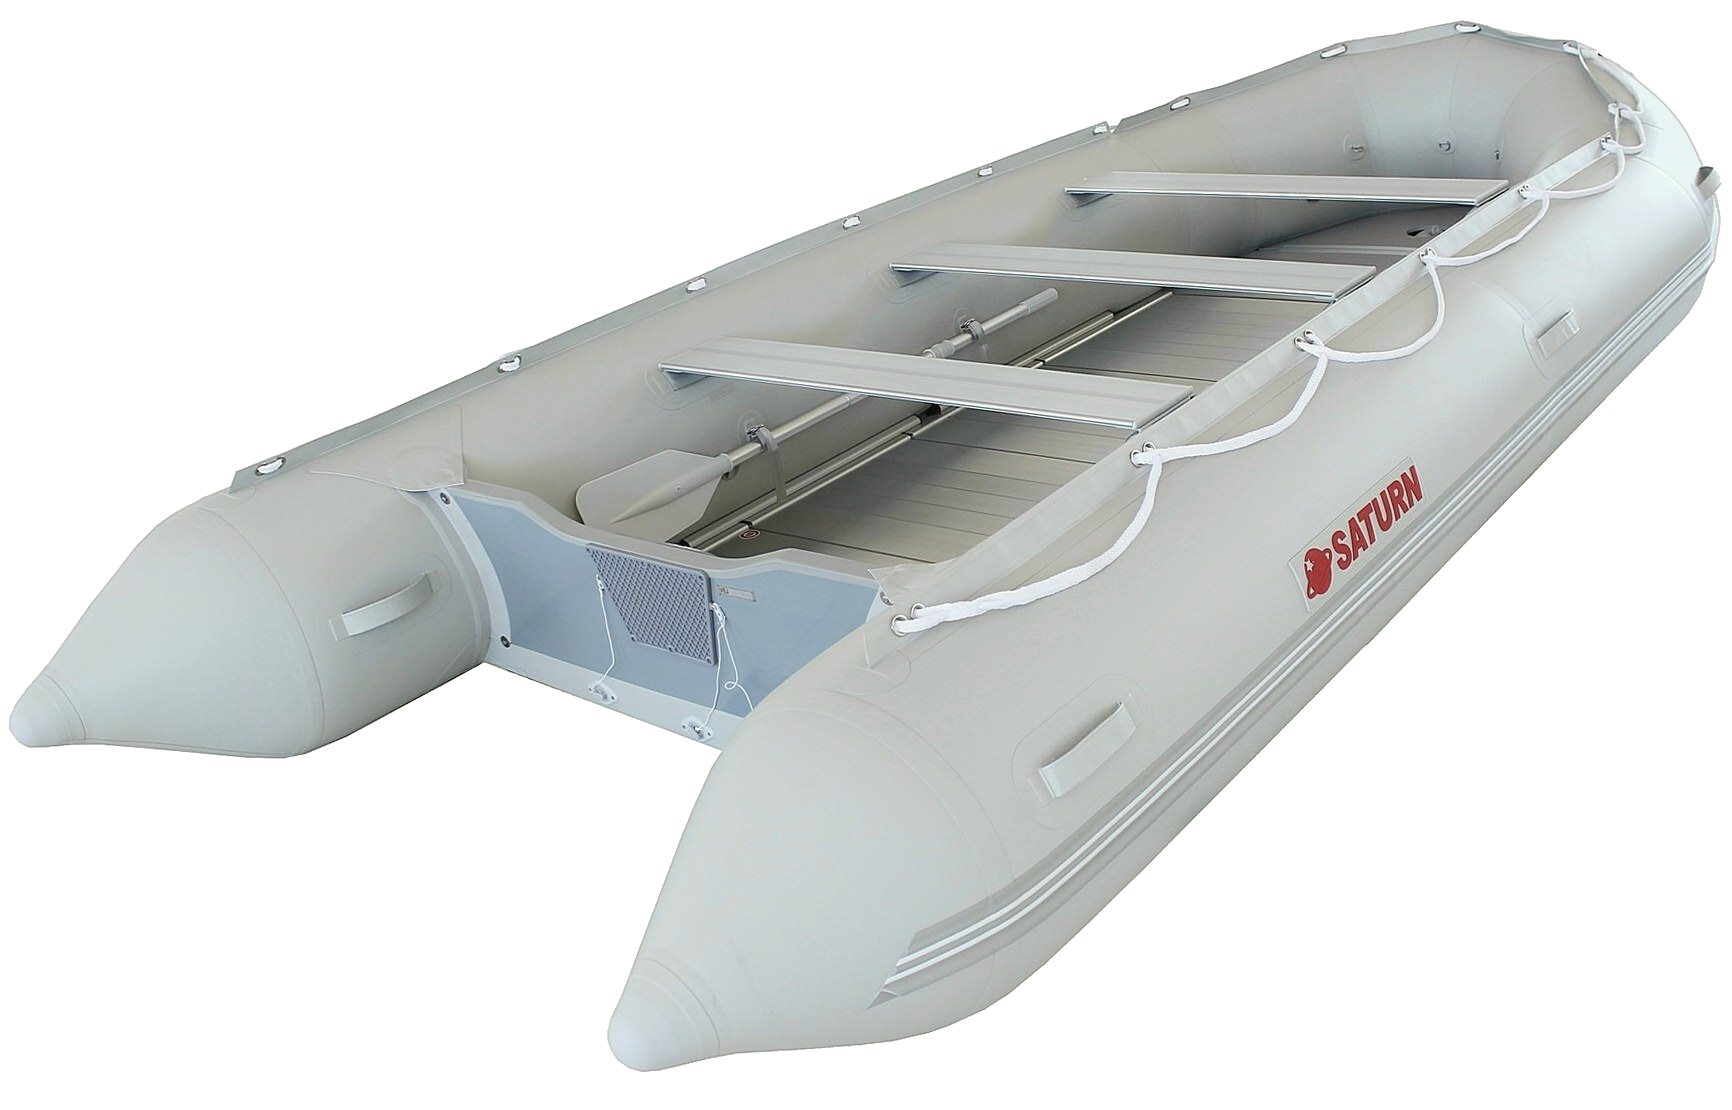 https://www.boatstogo.com/images/detailed/4/Saturn-SD470-Inflatable-Motor-Boat.JPG